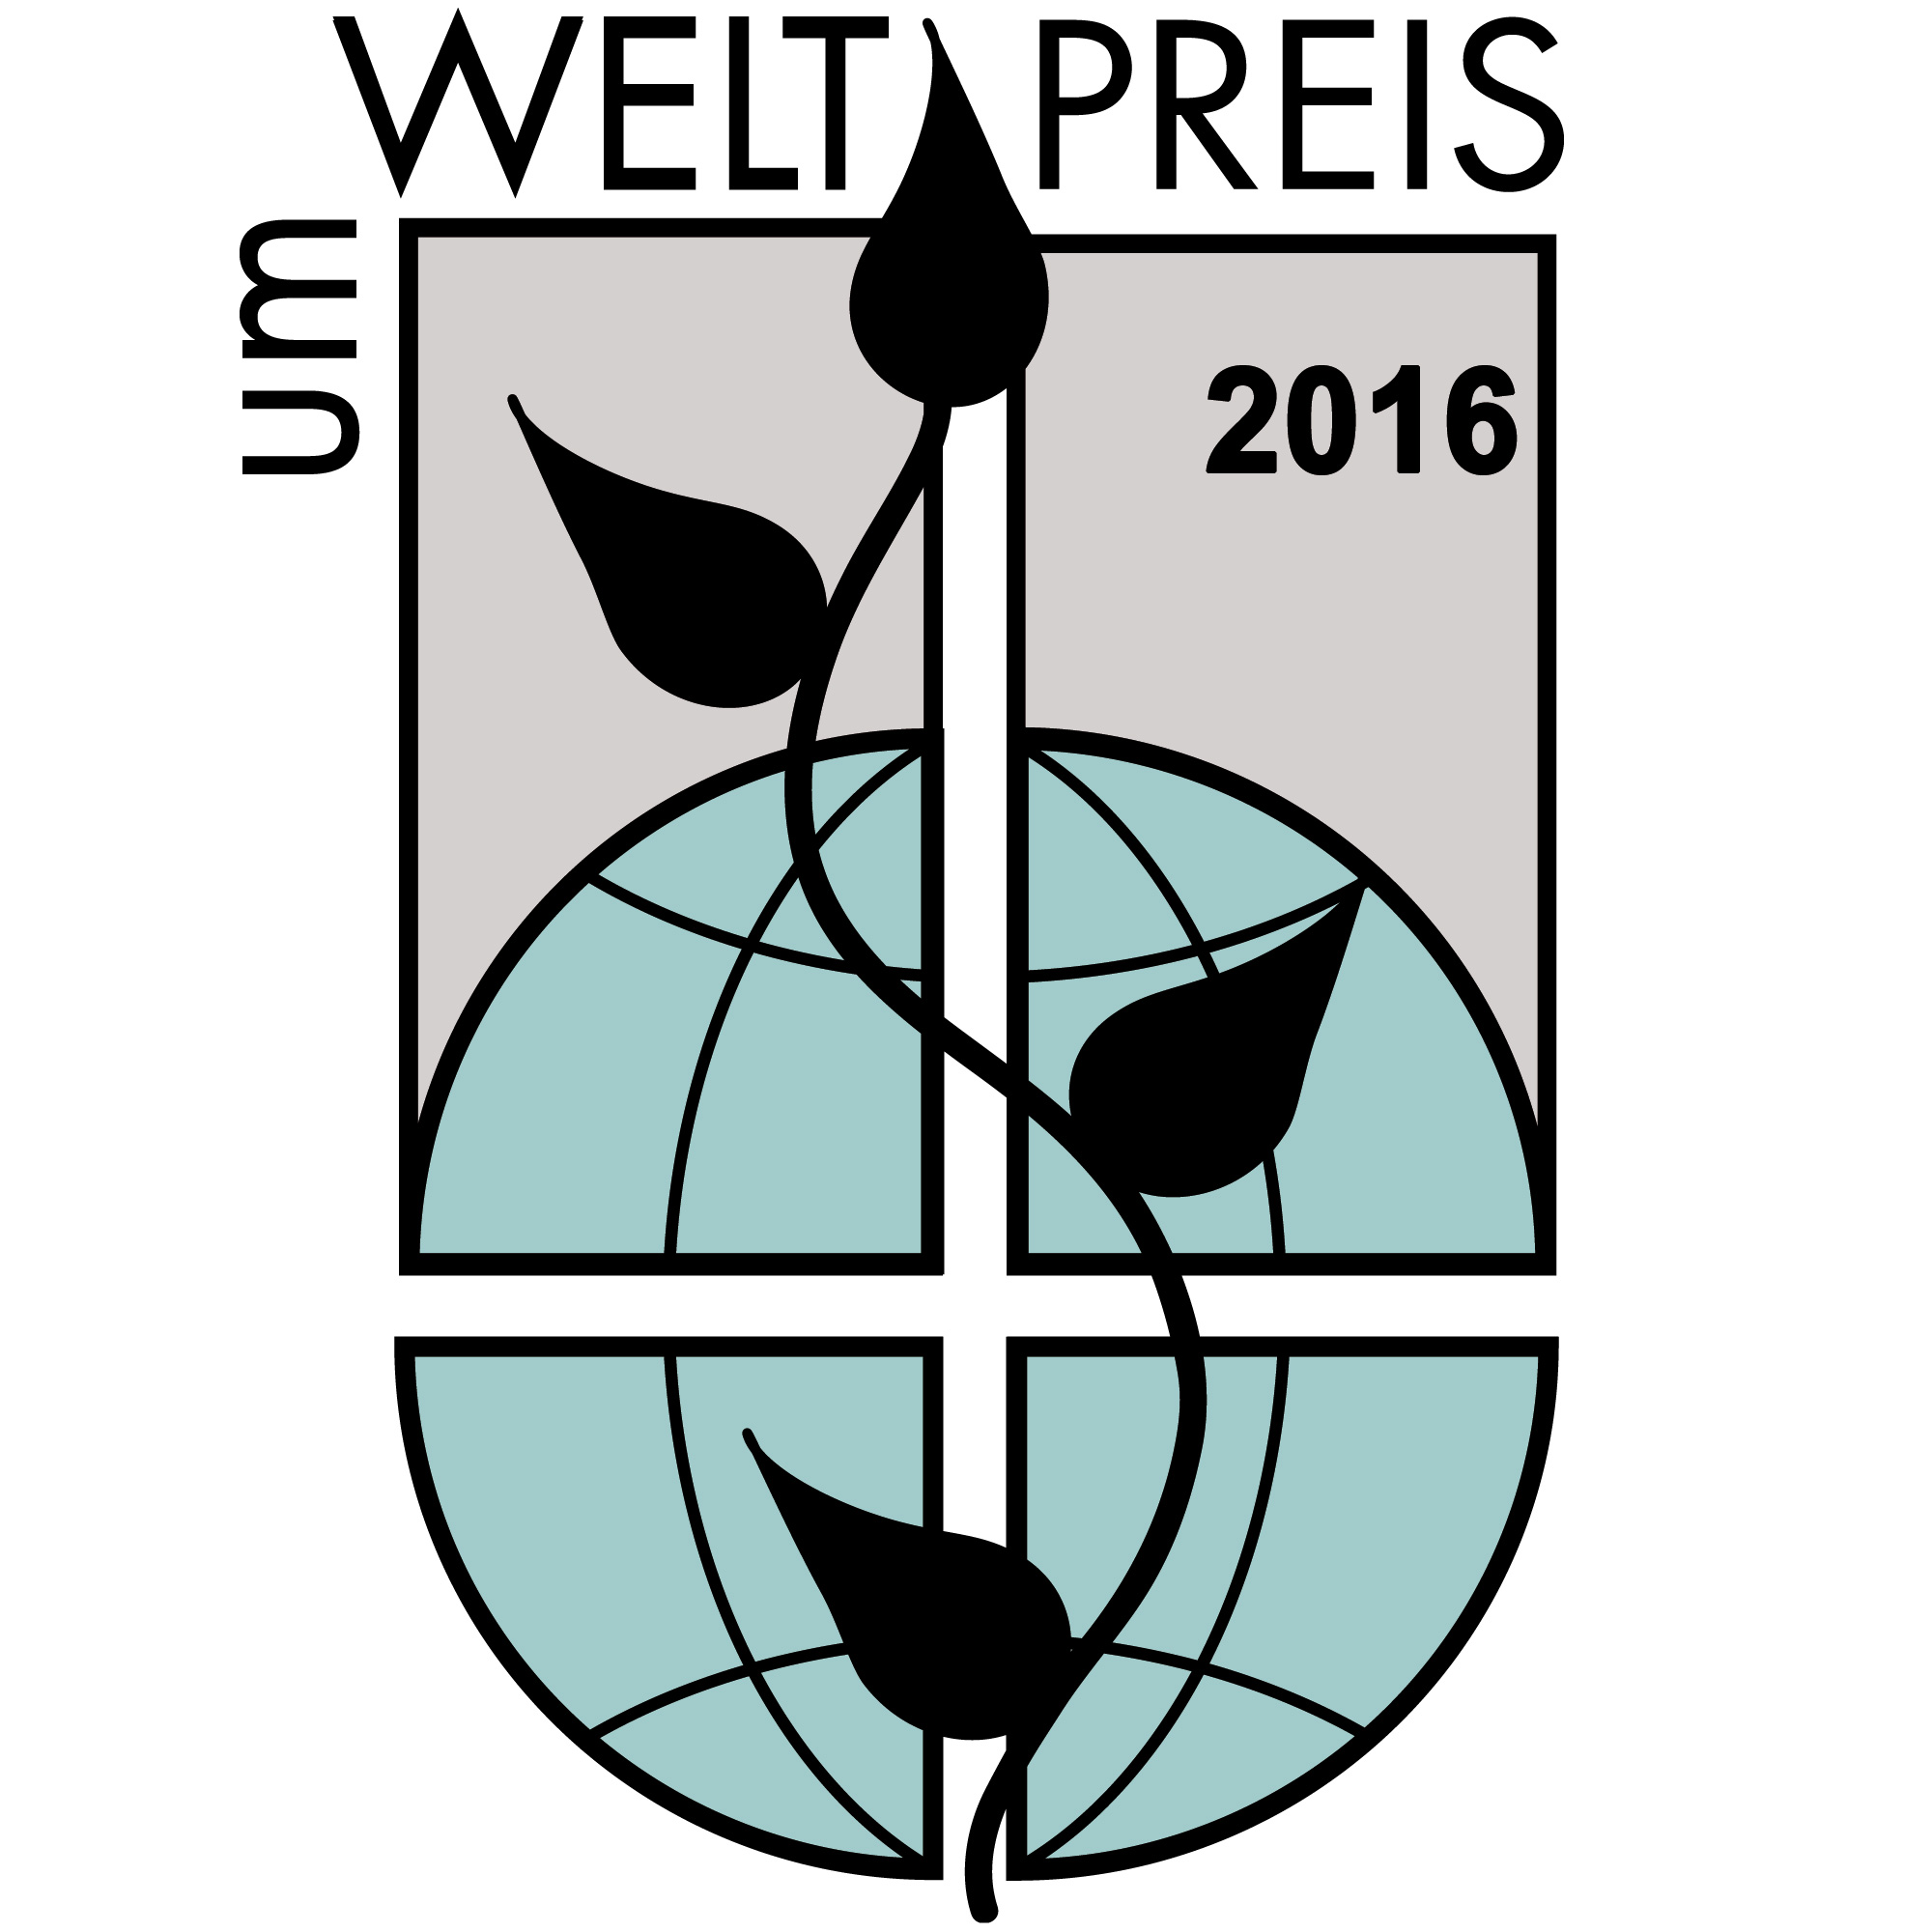 umWeltpreis 2016 Logo (c) umWeltpreis 2016